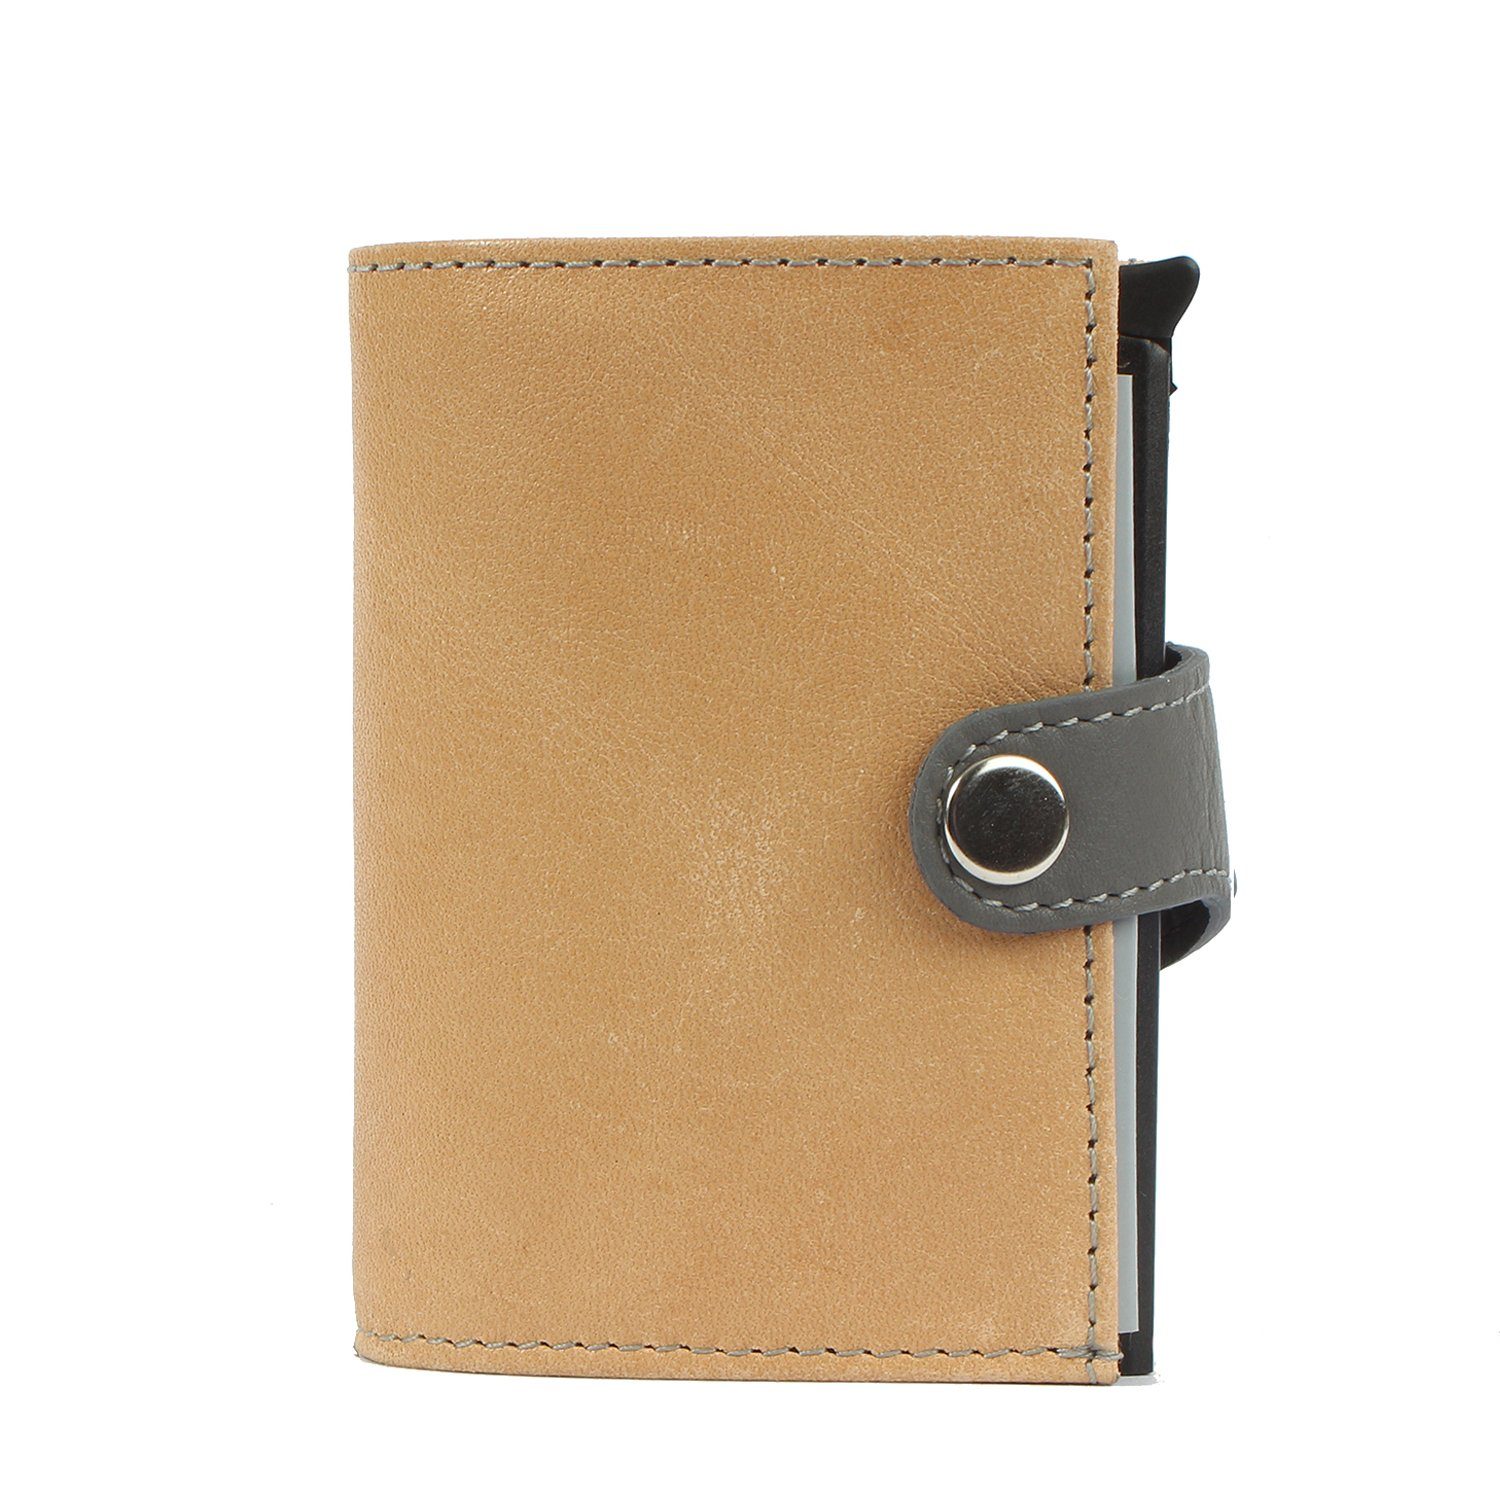 Margelisch Mini Geldbörse noonyu double leather, RFID Kreditkartenbörse aus Upcycling Leder natural